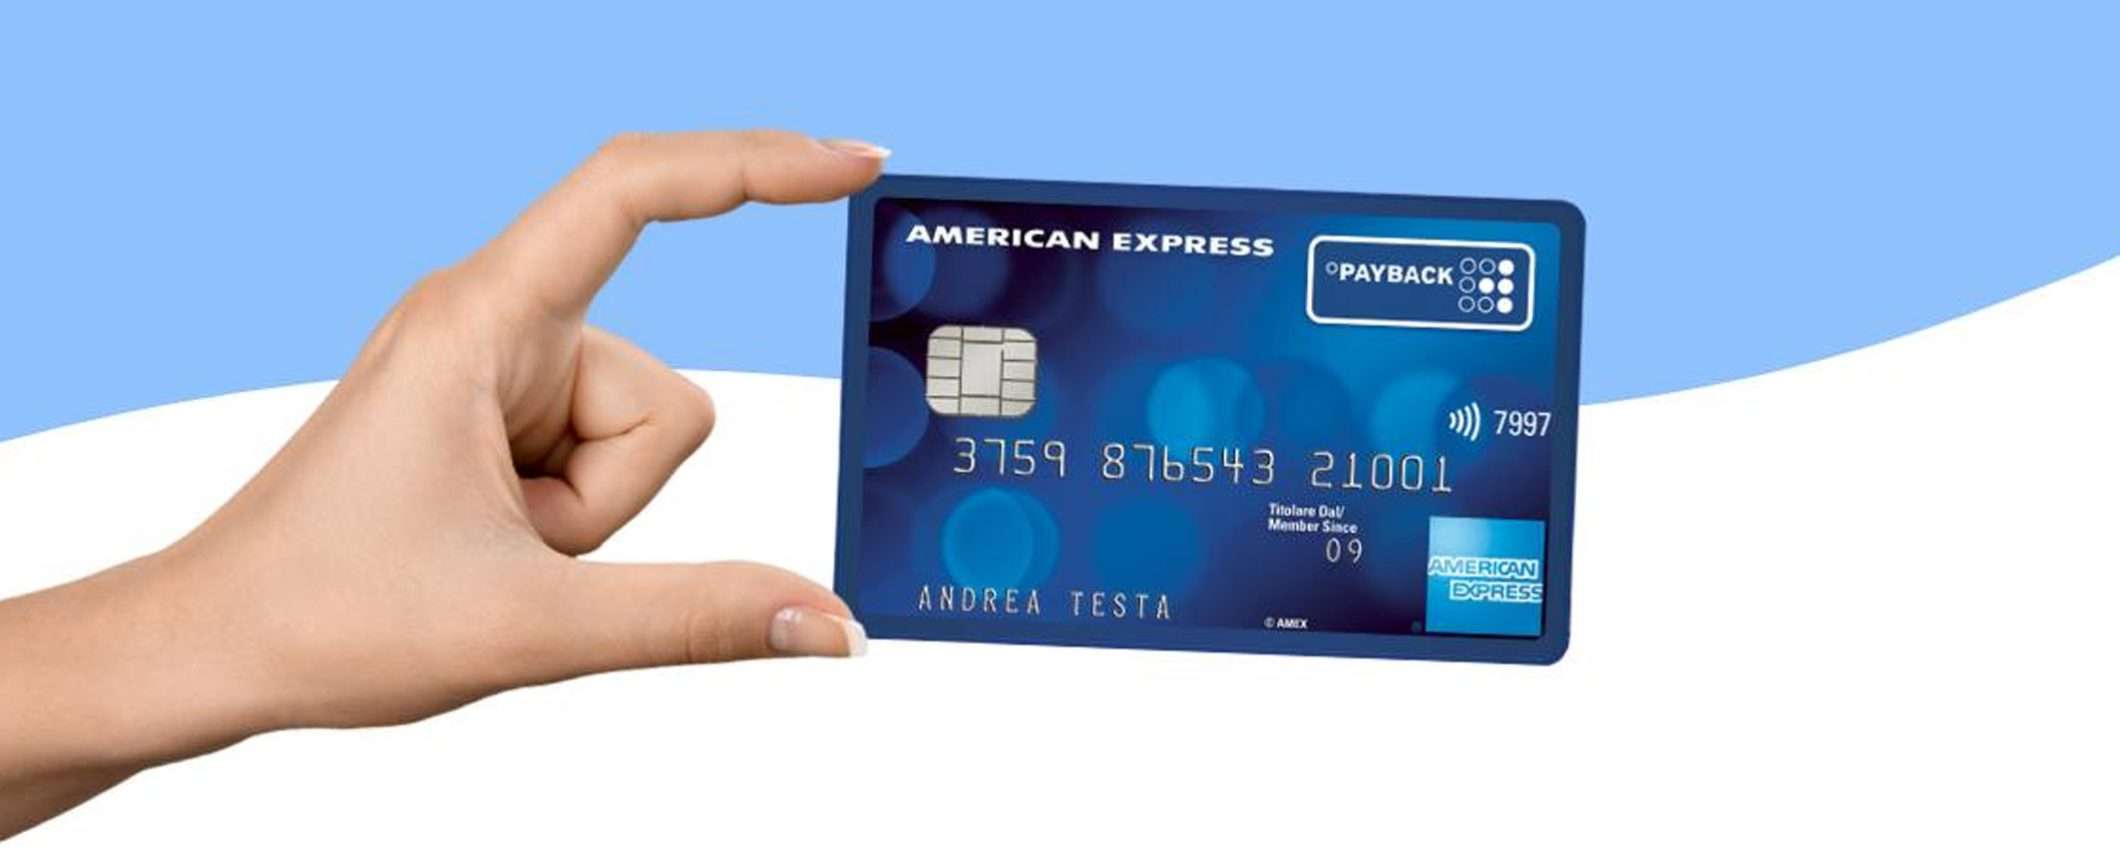 Accumula più punti con i partner online di American Express PAYBACK